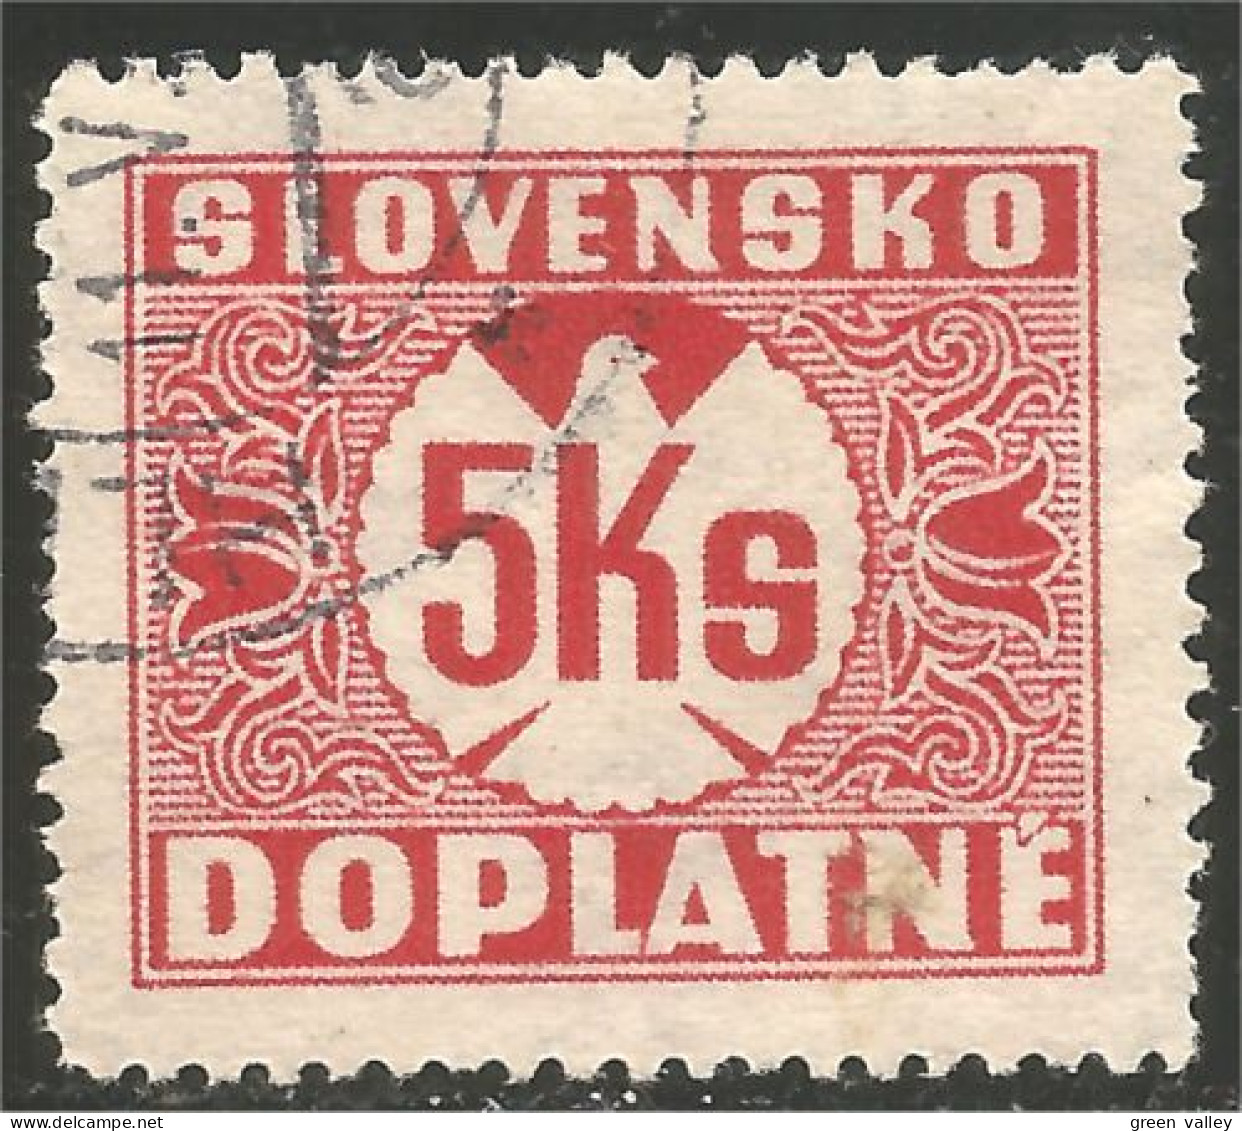 810 Slovensko Slovakia 1941 Postage Due Taxe 5 Ks Carmine (SLK-58c) - Usati